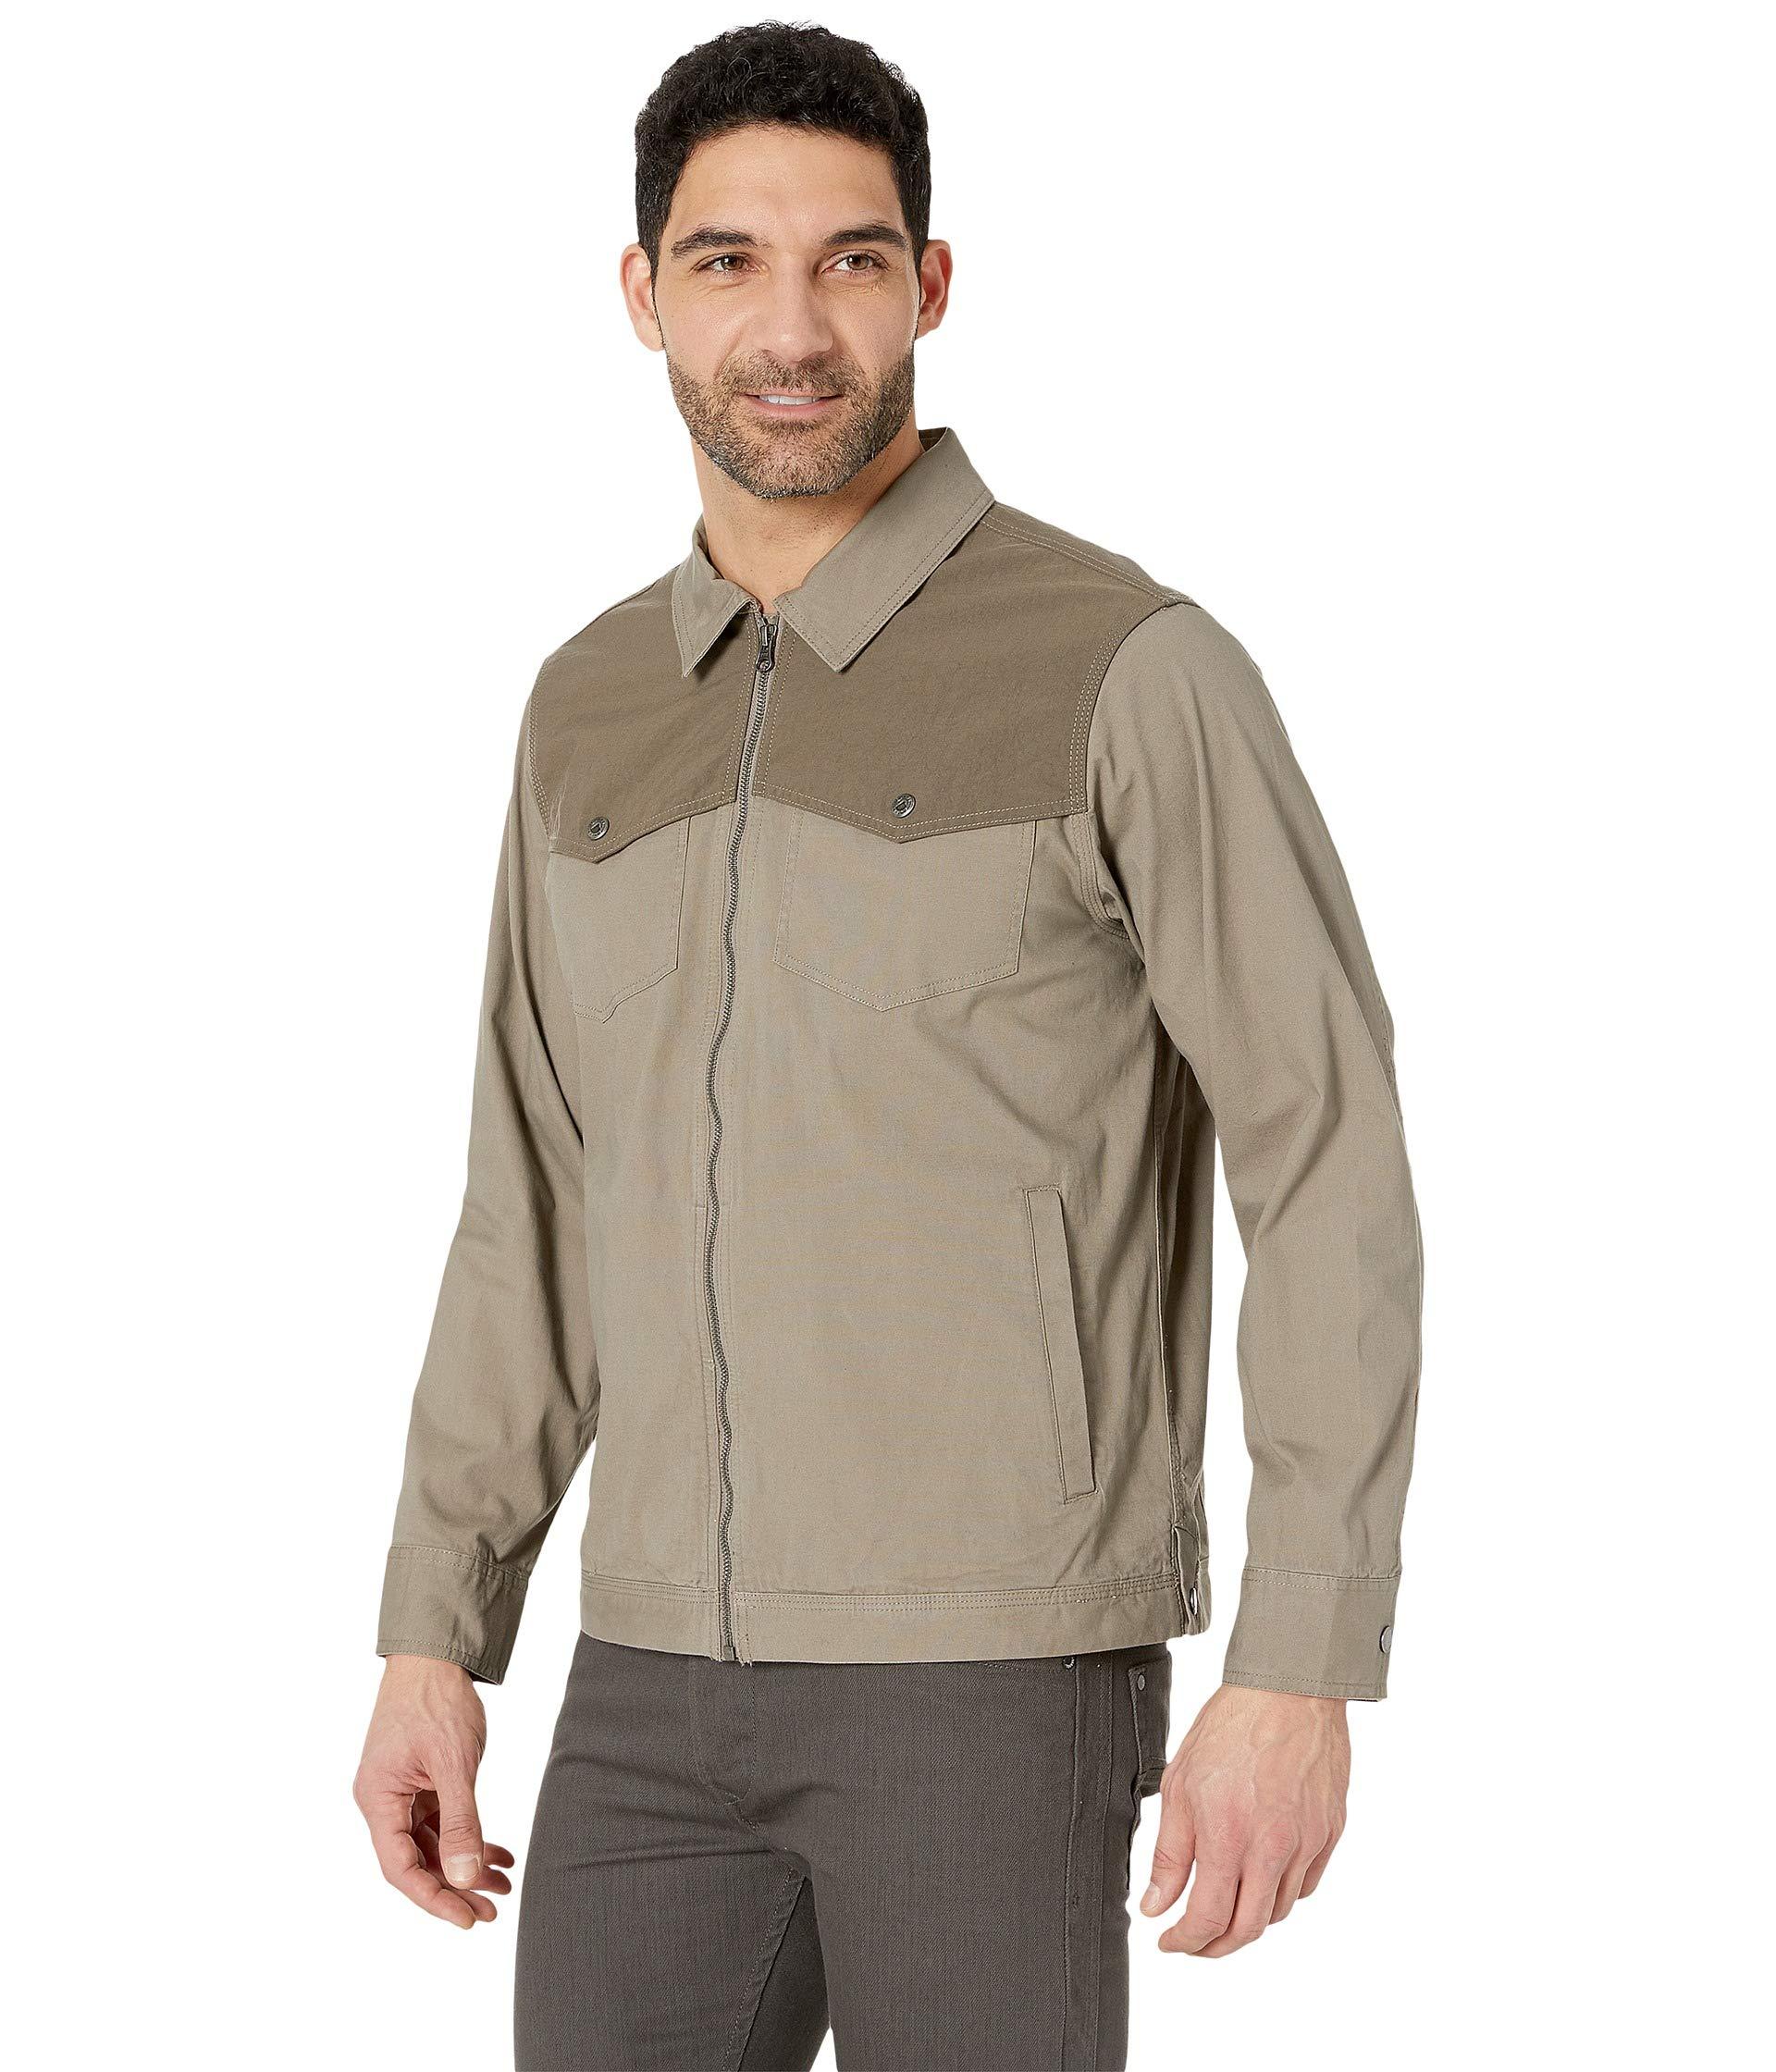 Mountain Khakis Cotton All Mountain Jacket in Gray for Men - Lyst